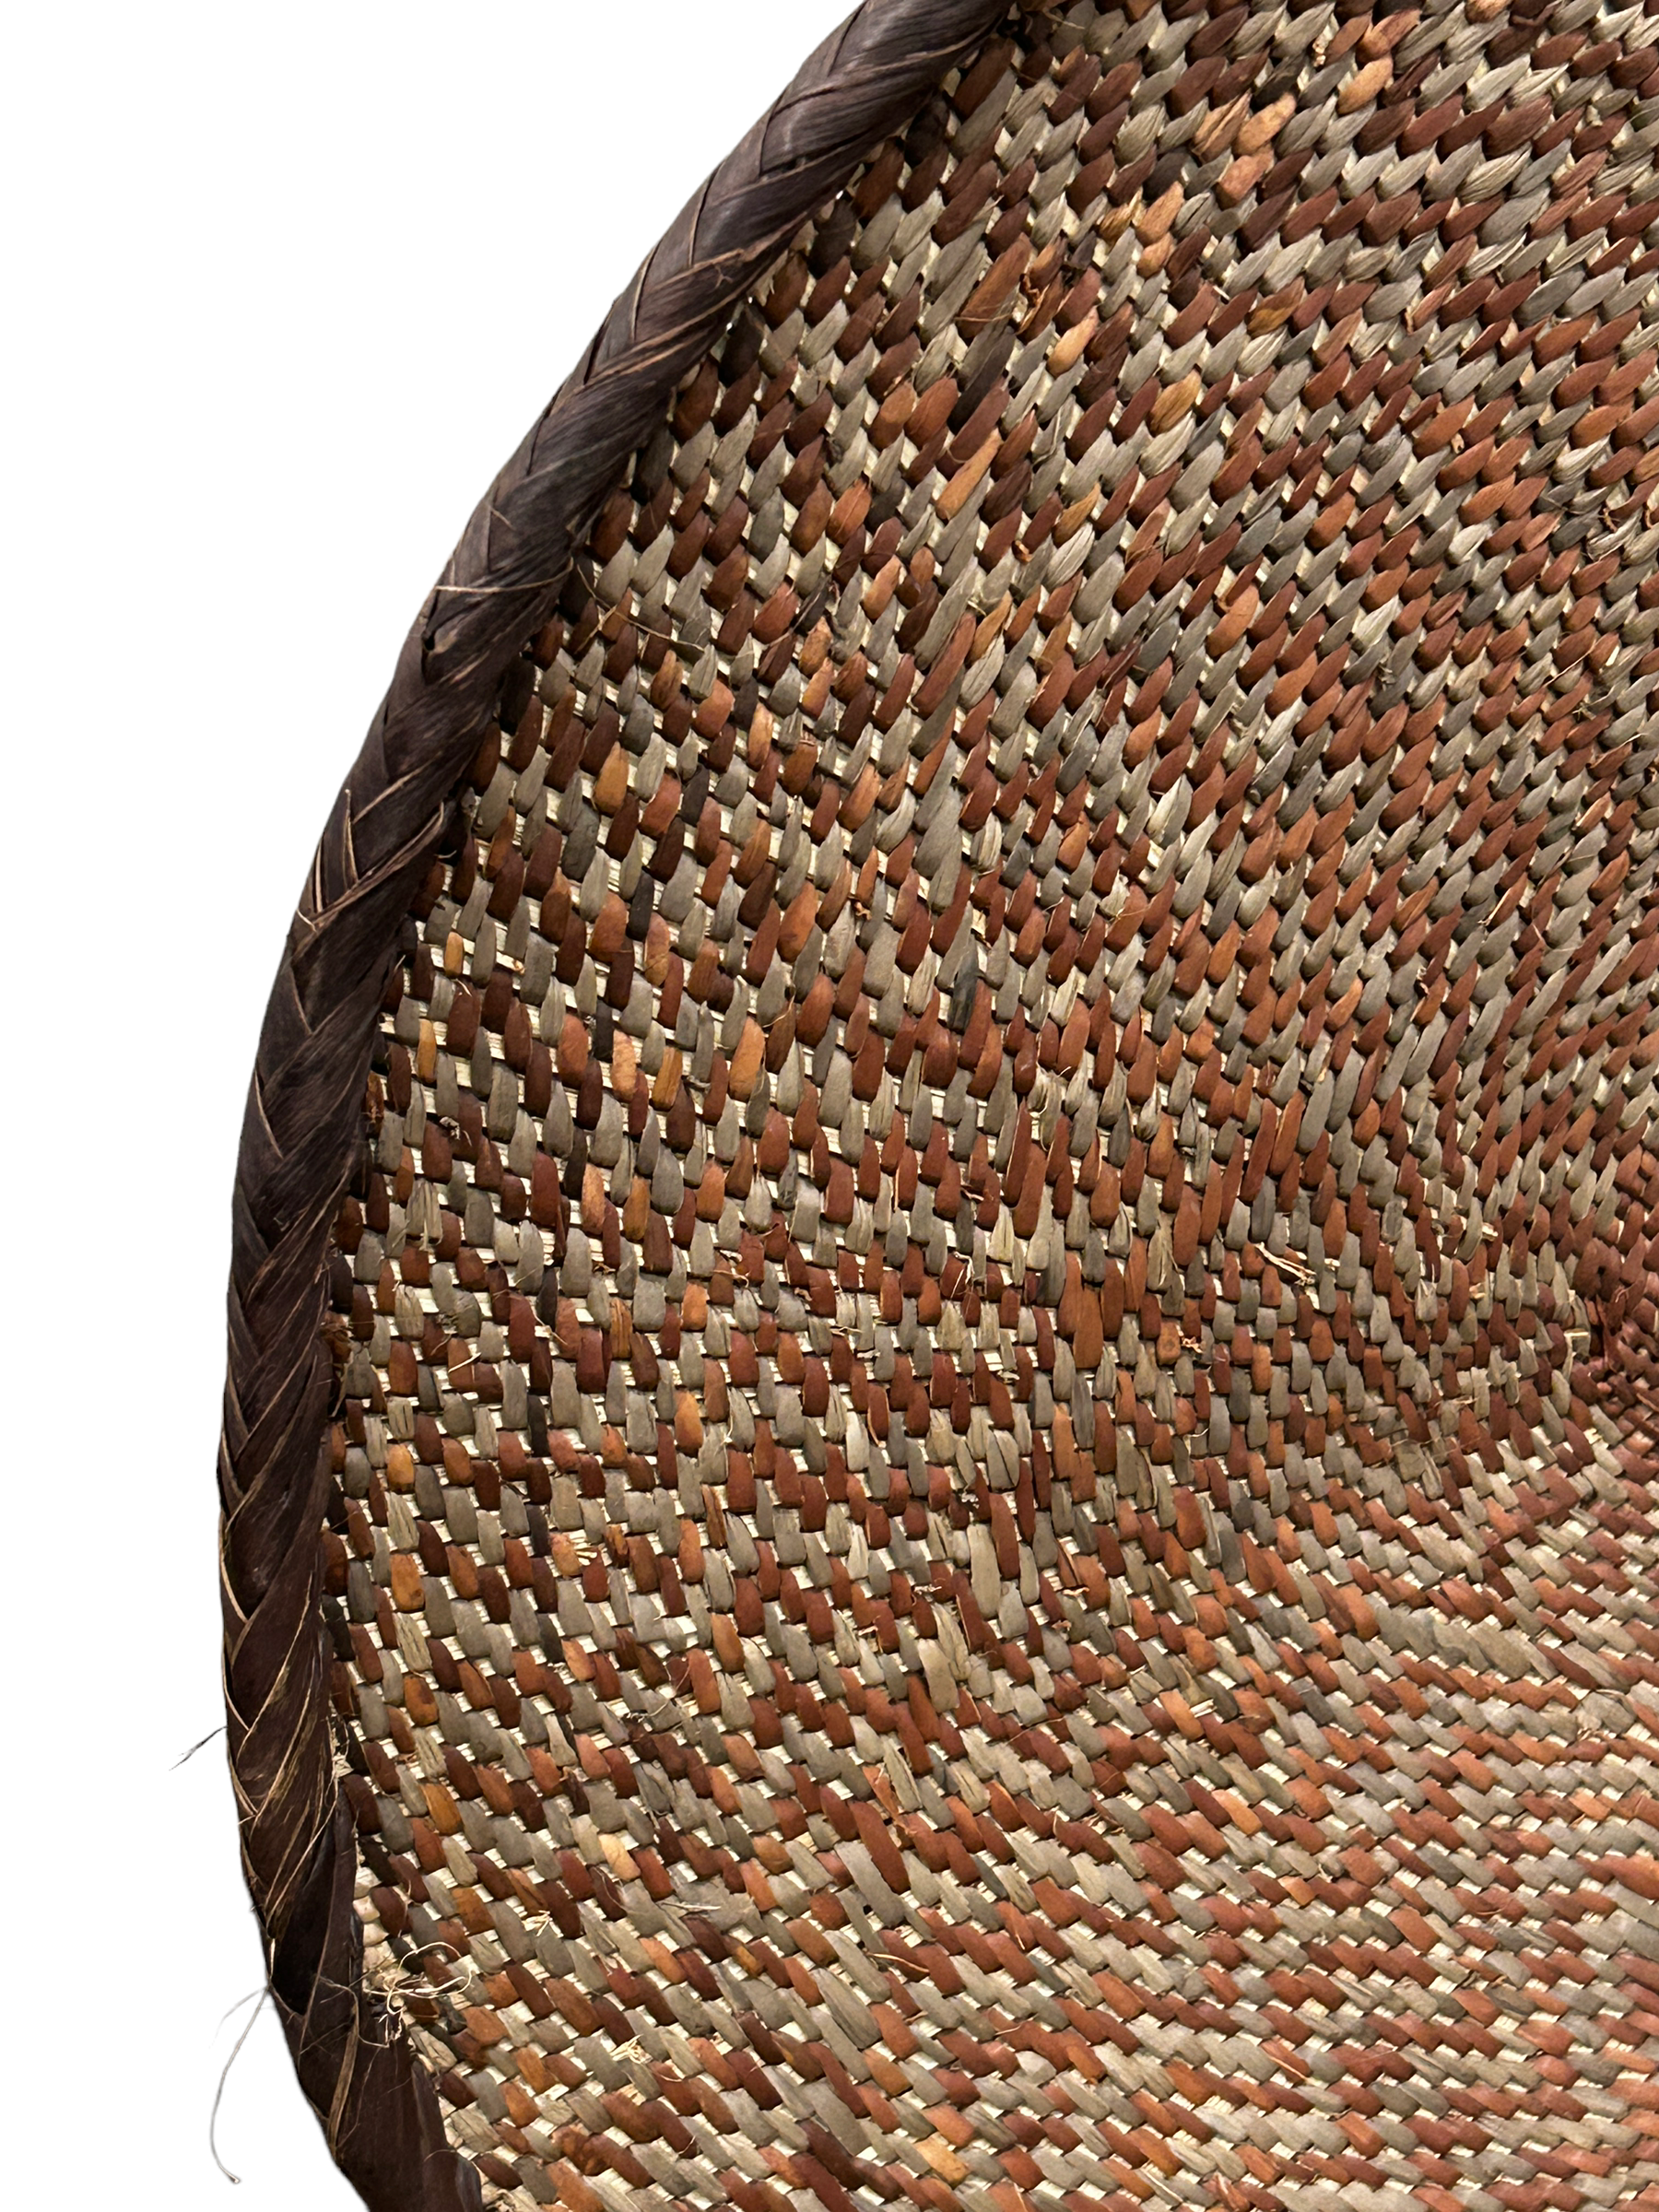 Tonga Basket Natural (45-02)